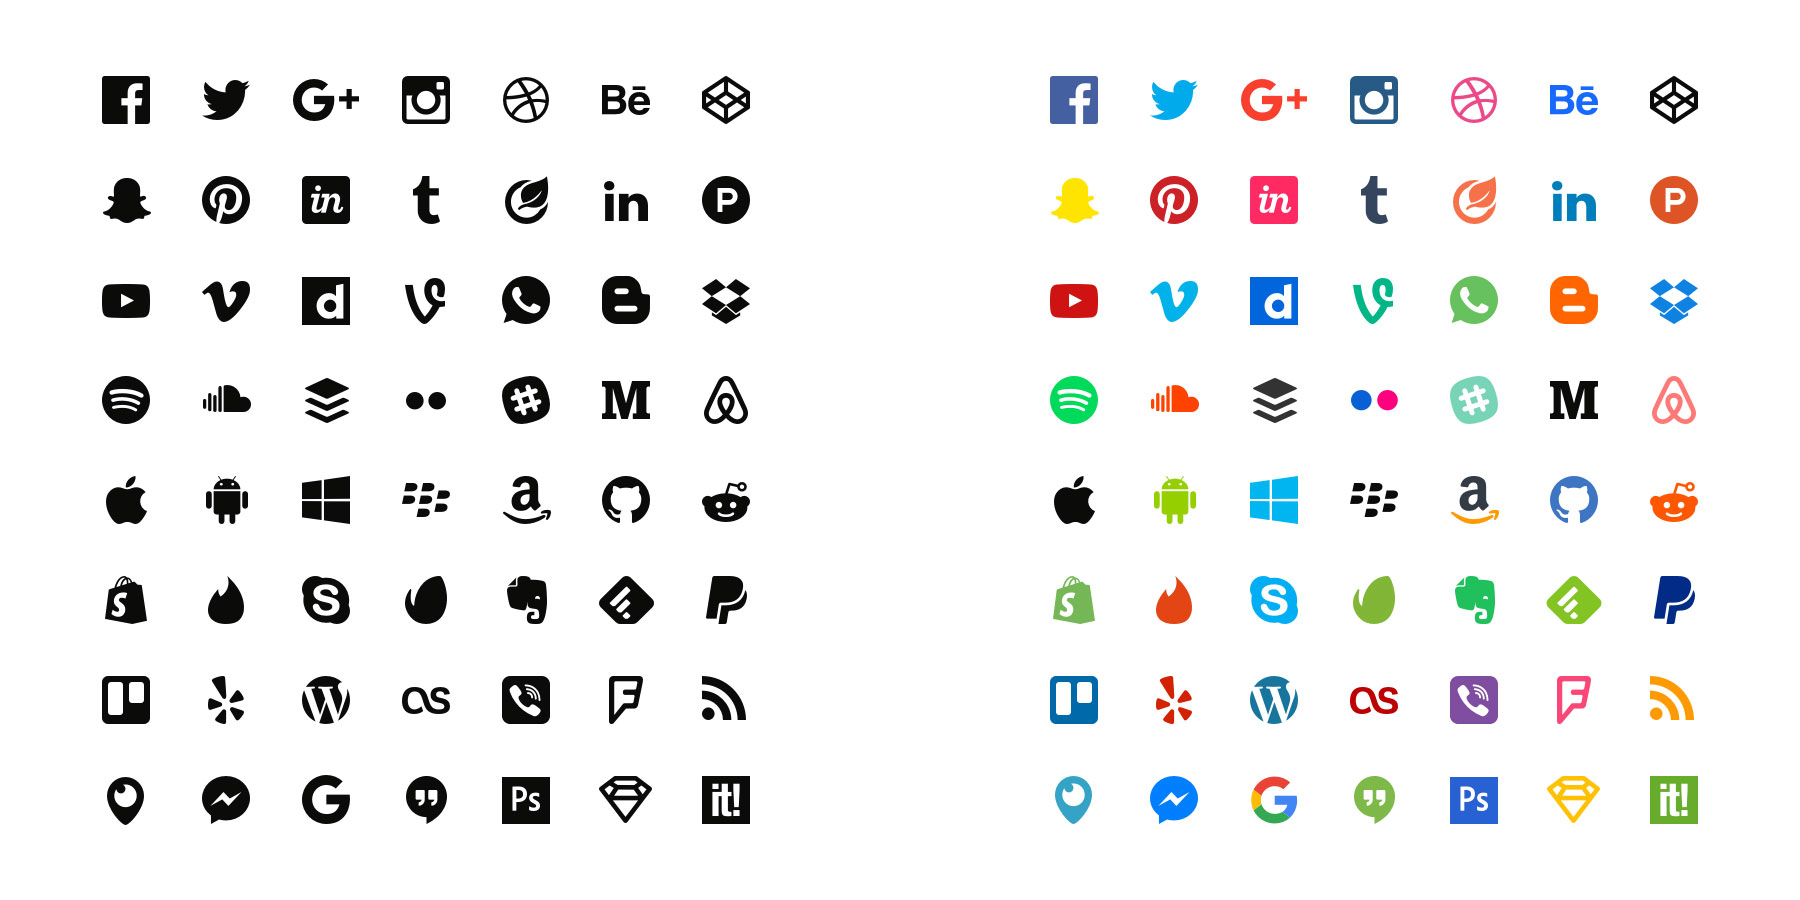 Flat Social Icons